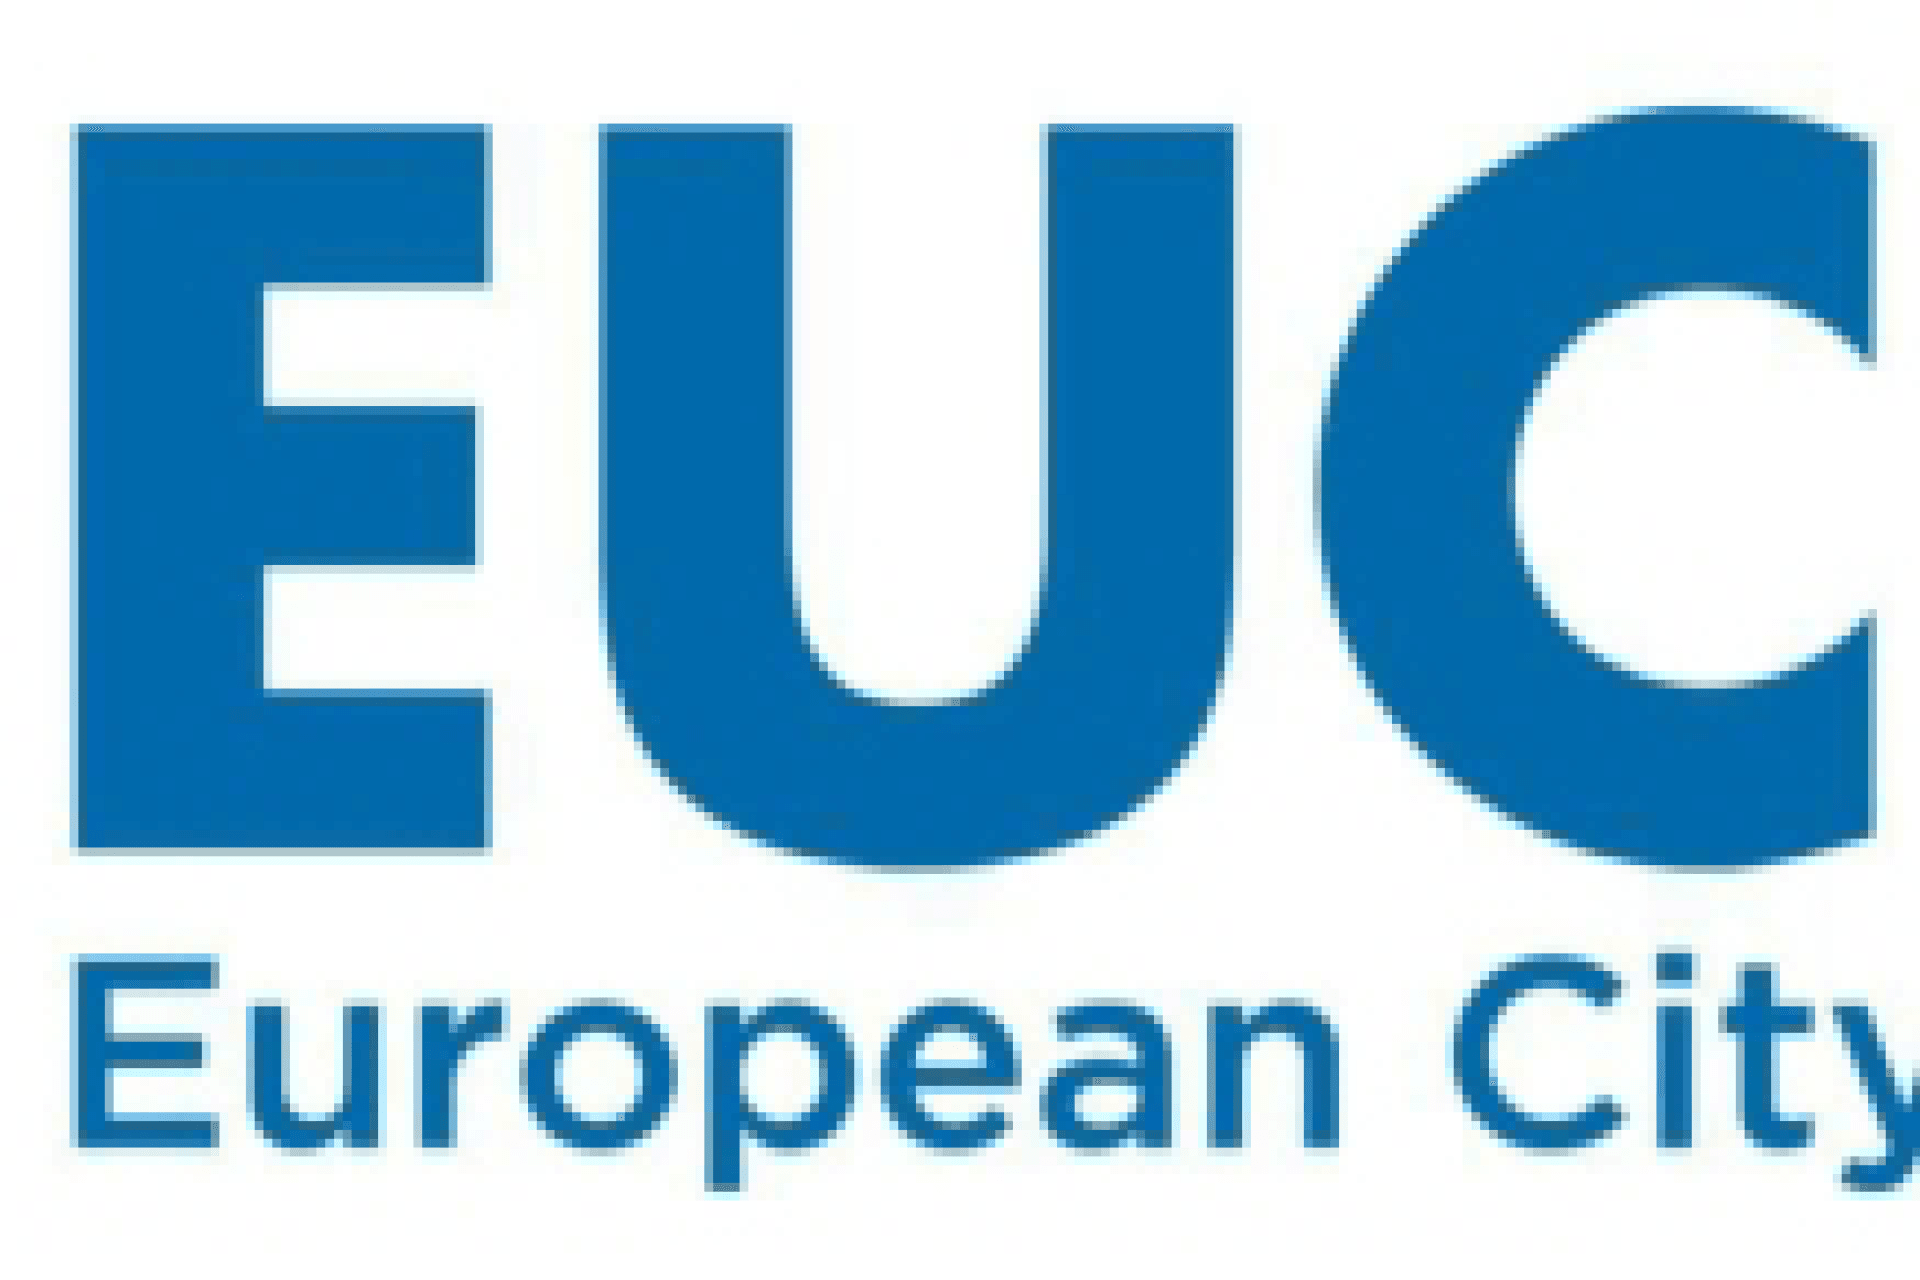 Afbeelding van logo European City Facility